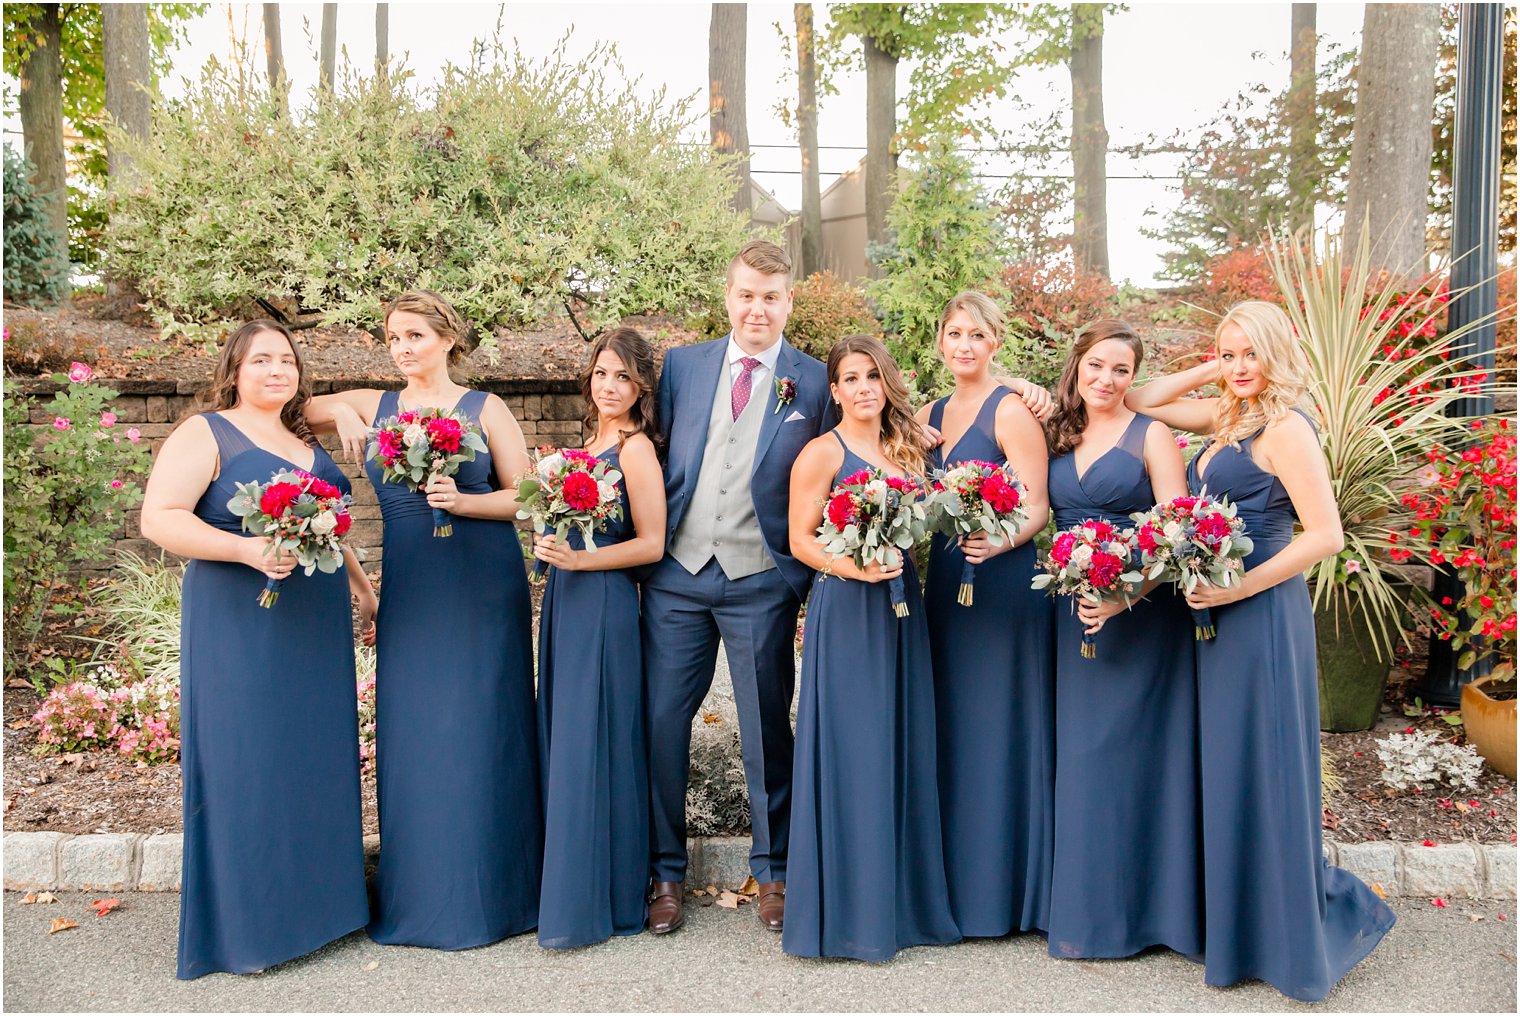 Groom and bridesmaids | Photos by NJ Wedding Photographers Idalia Photography